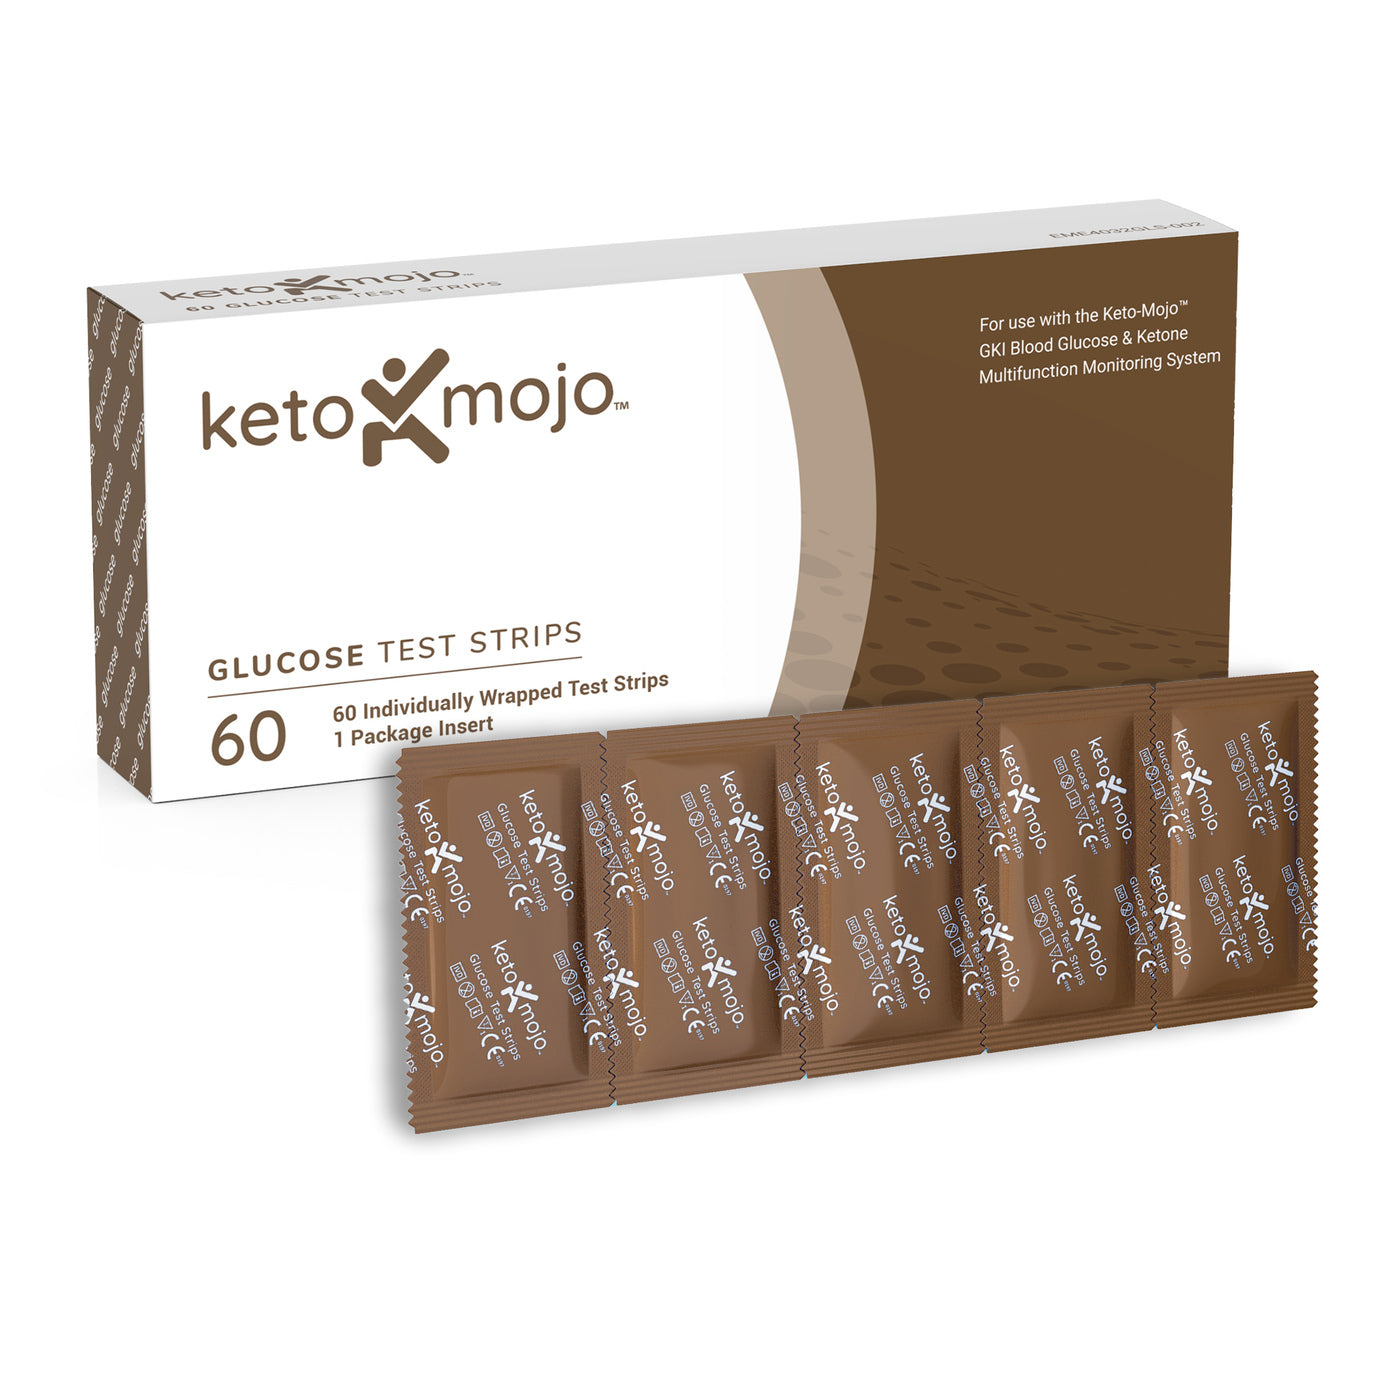 KETO MOJO™ - GKI - BLOOD GLUCOSE TEST STRIPS (60'S)